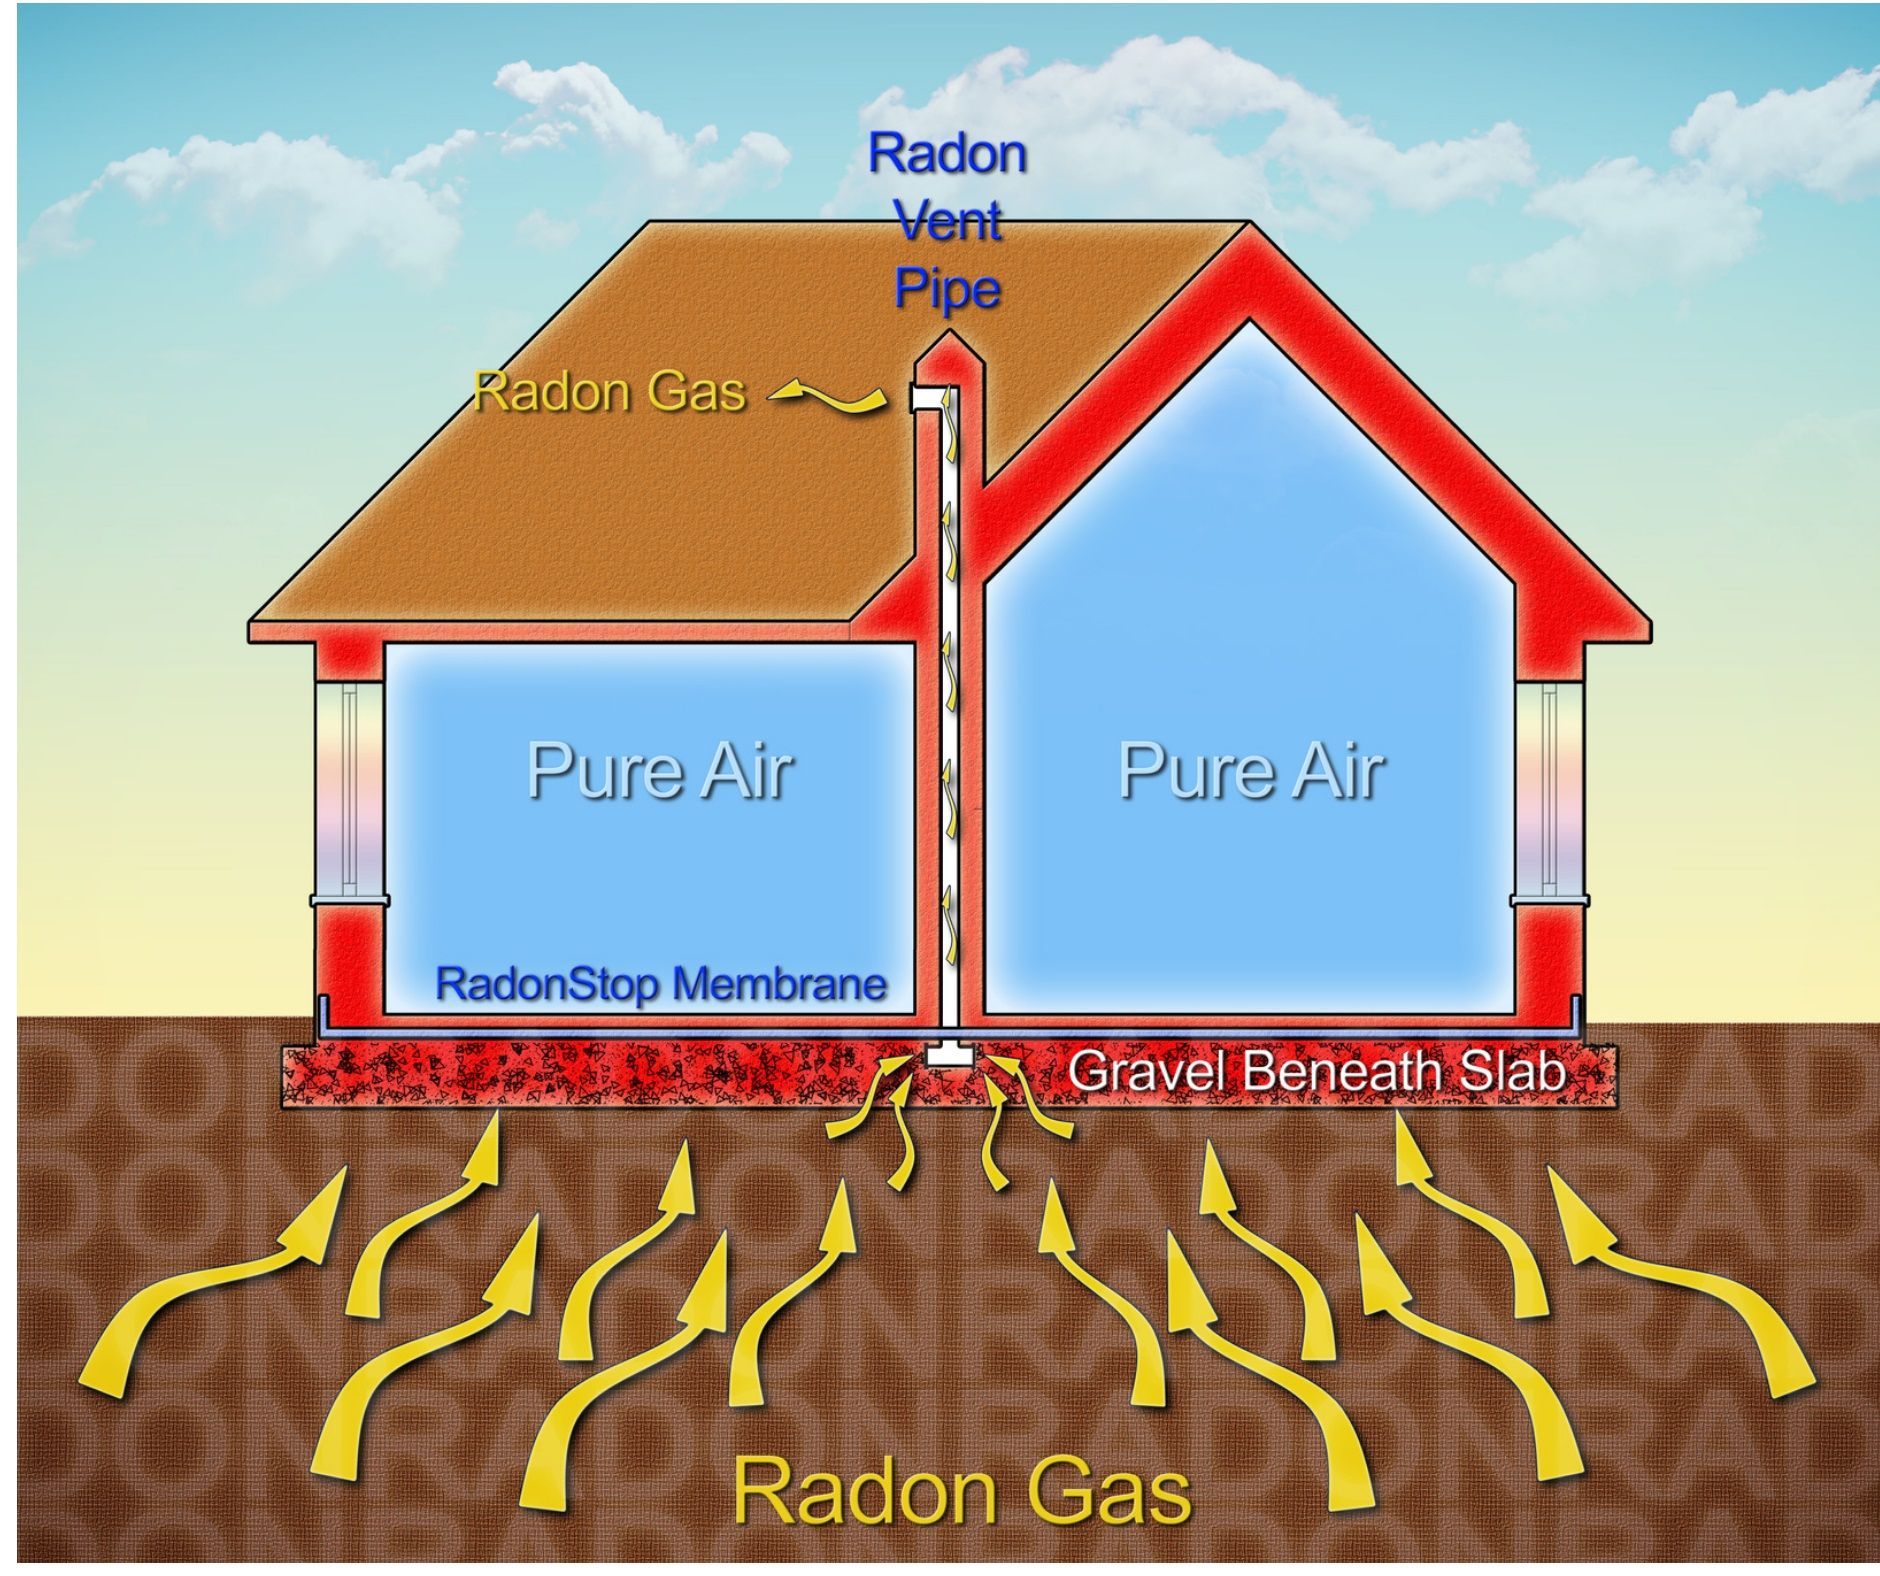 Radon Gas when buying a home in Vermont